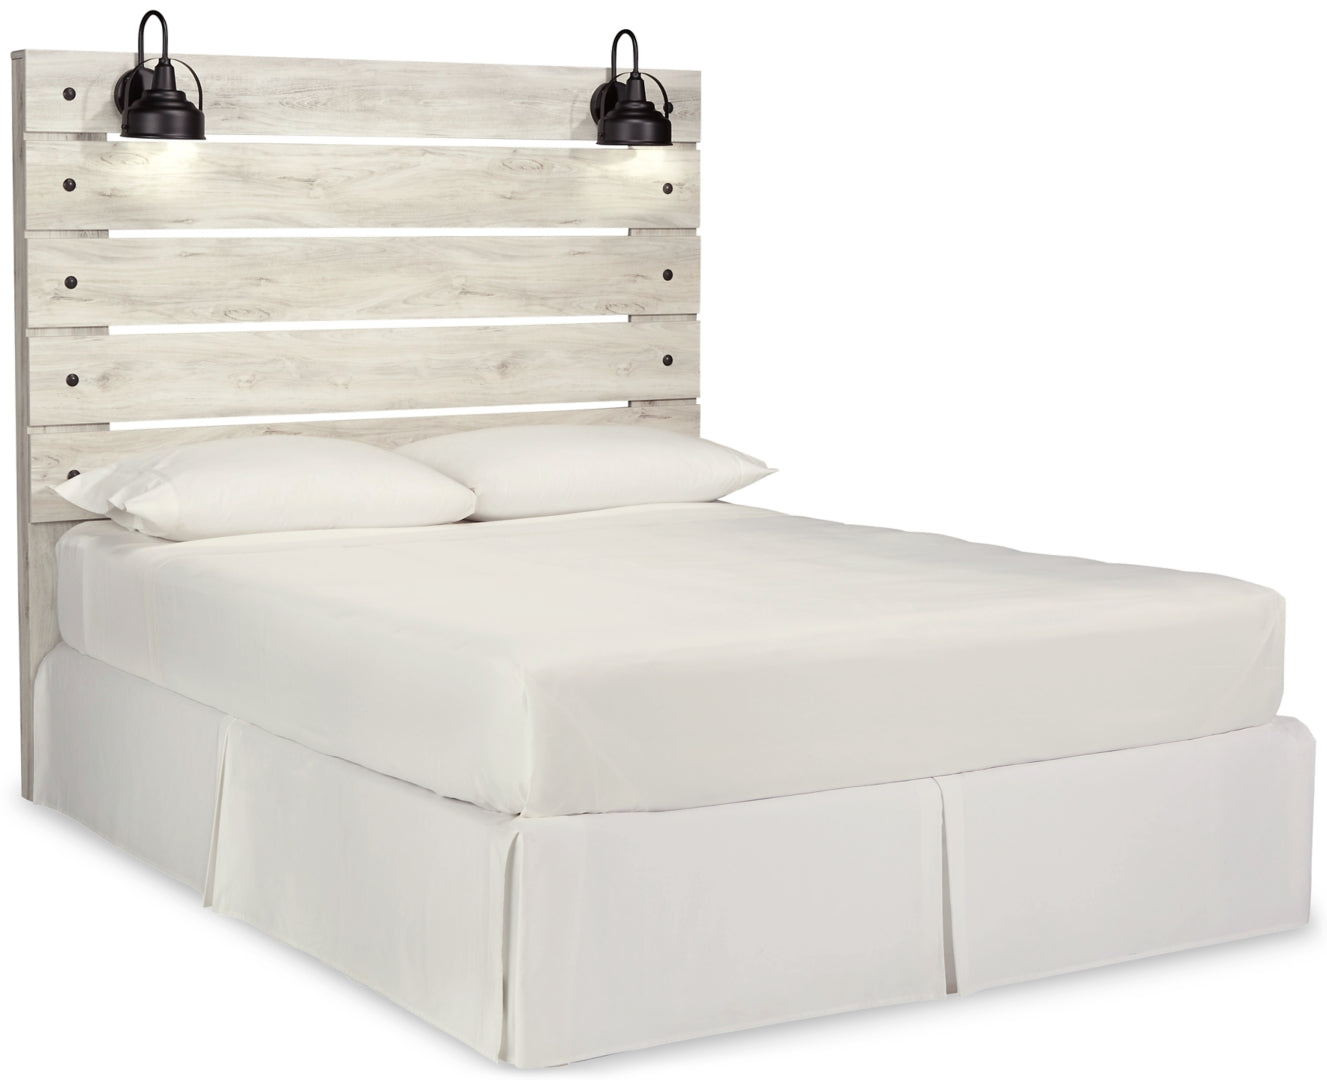 Cambeck Queen Panel Headboard Bed with Dresser